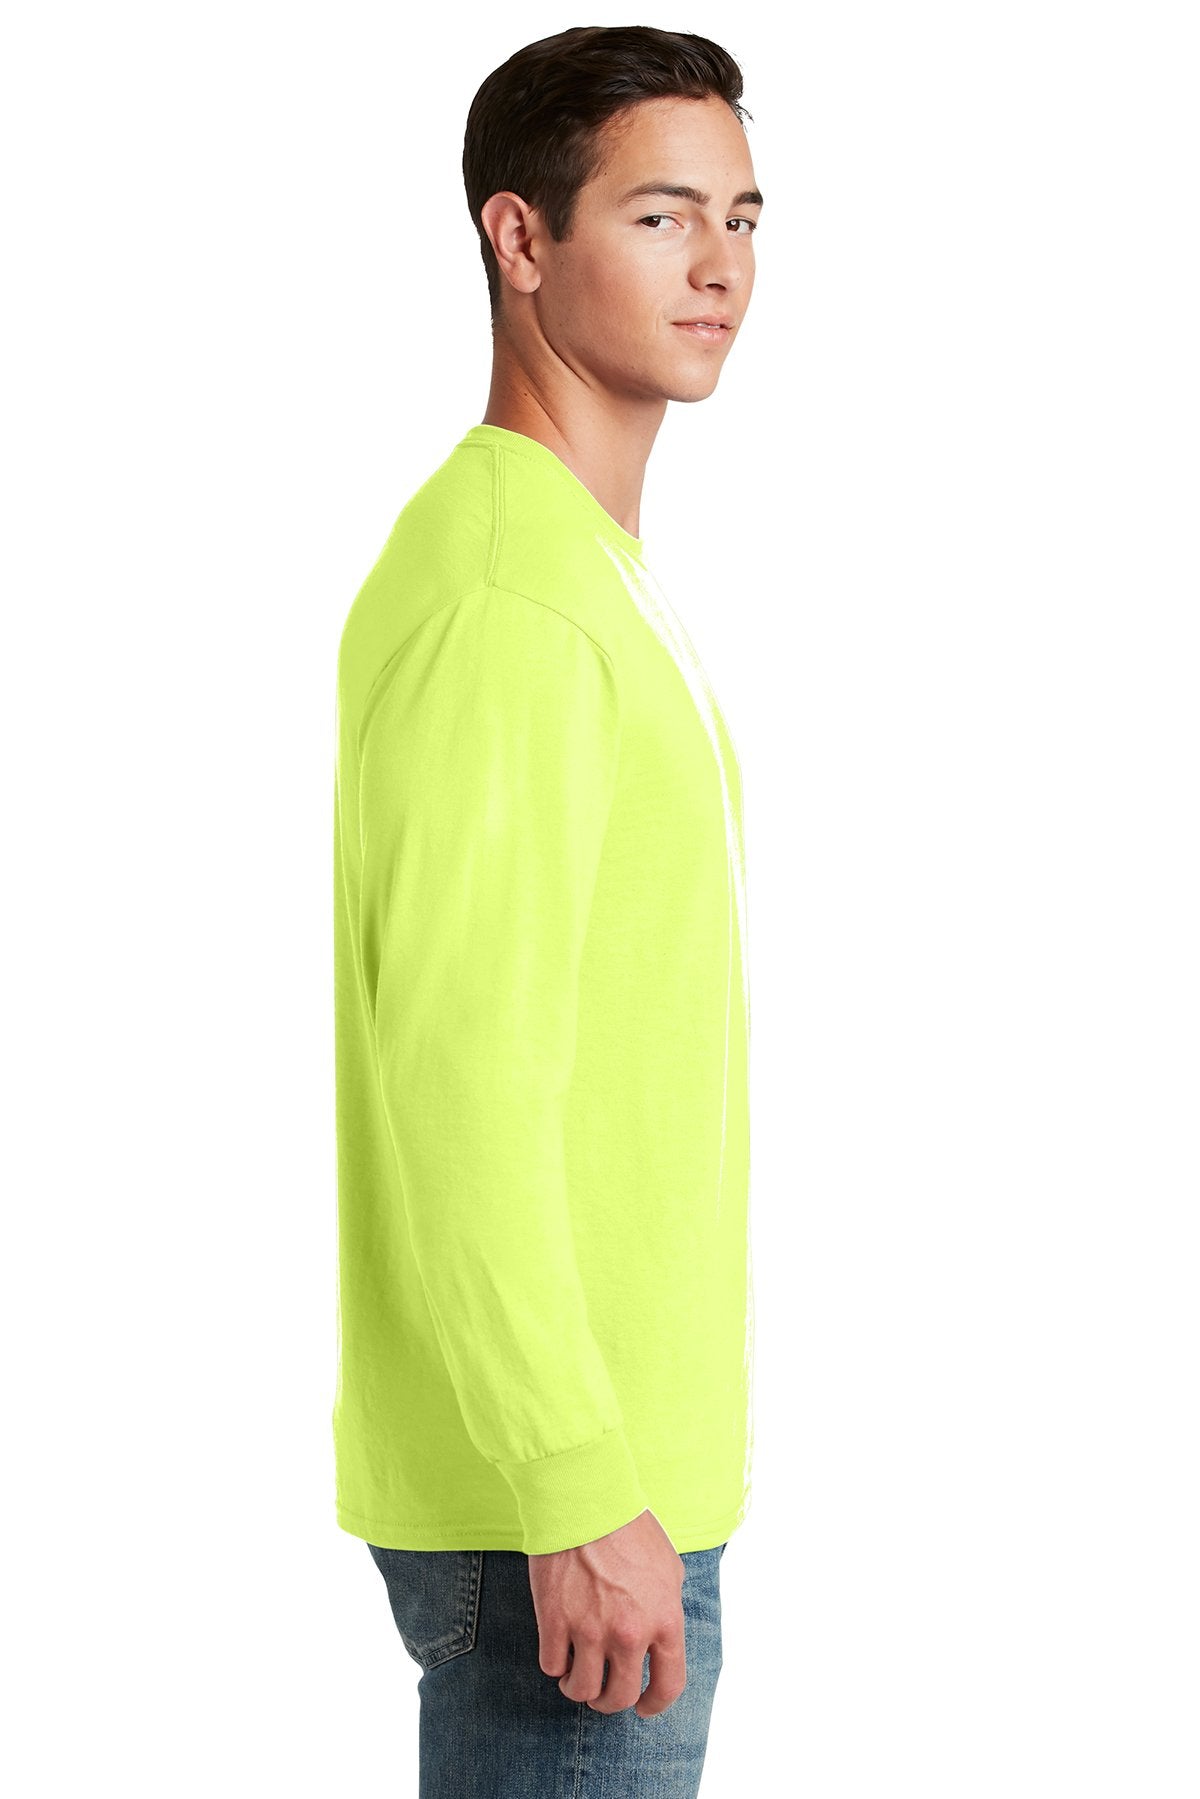 Jerzees Dri-Power 50/50 Cotton/Poly Long Sleeve T-Shirt 29LS Safety Green